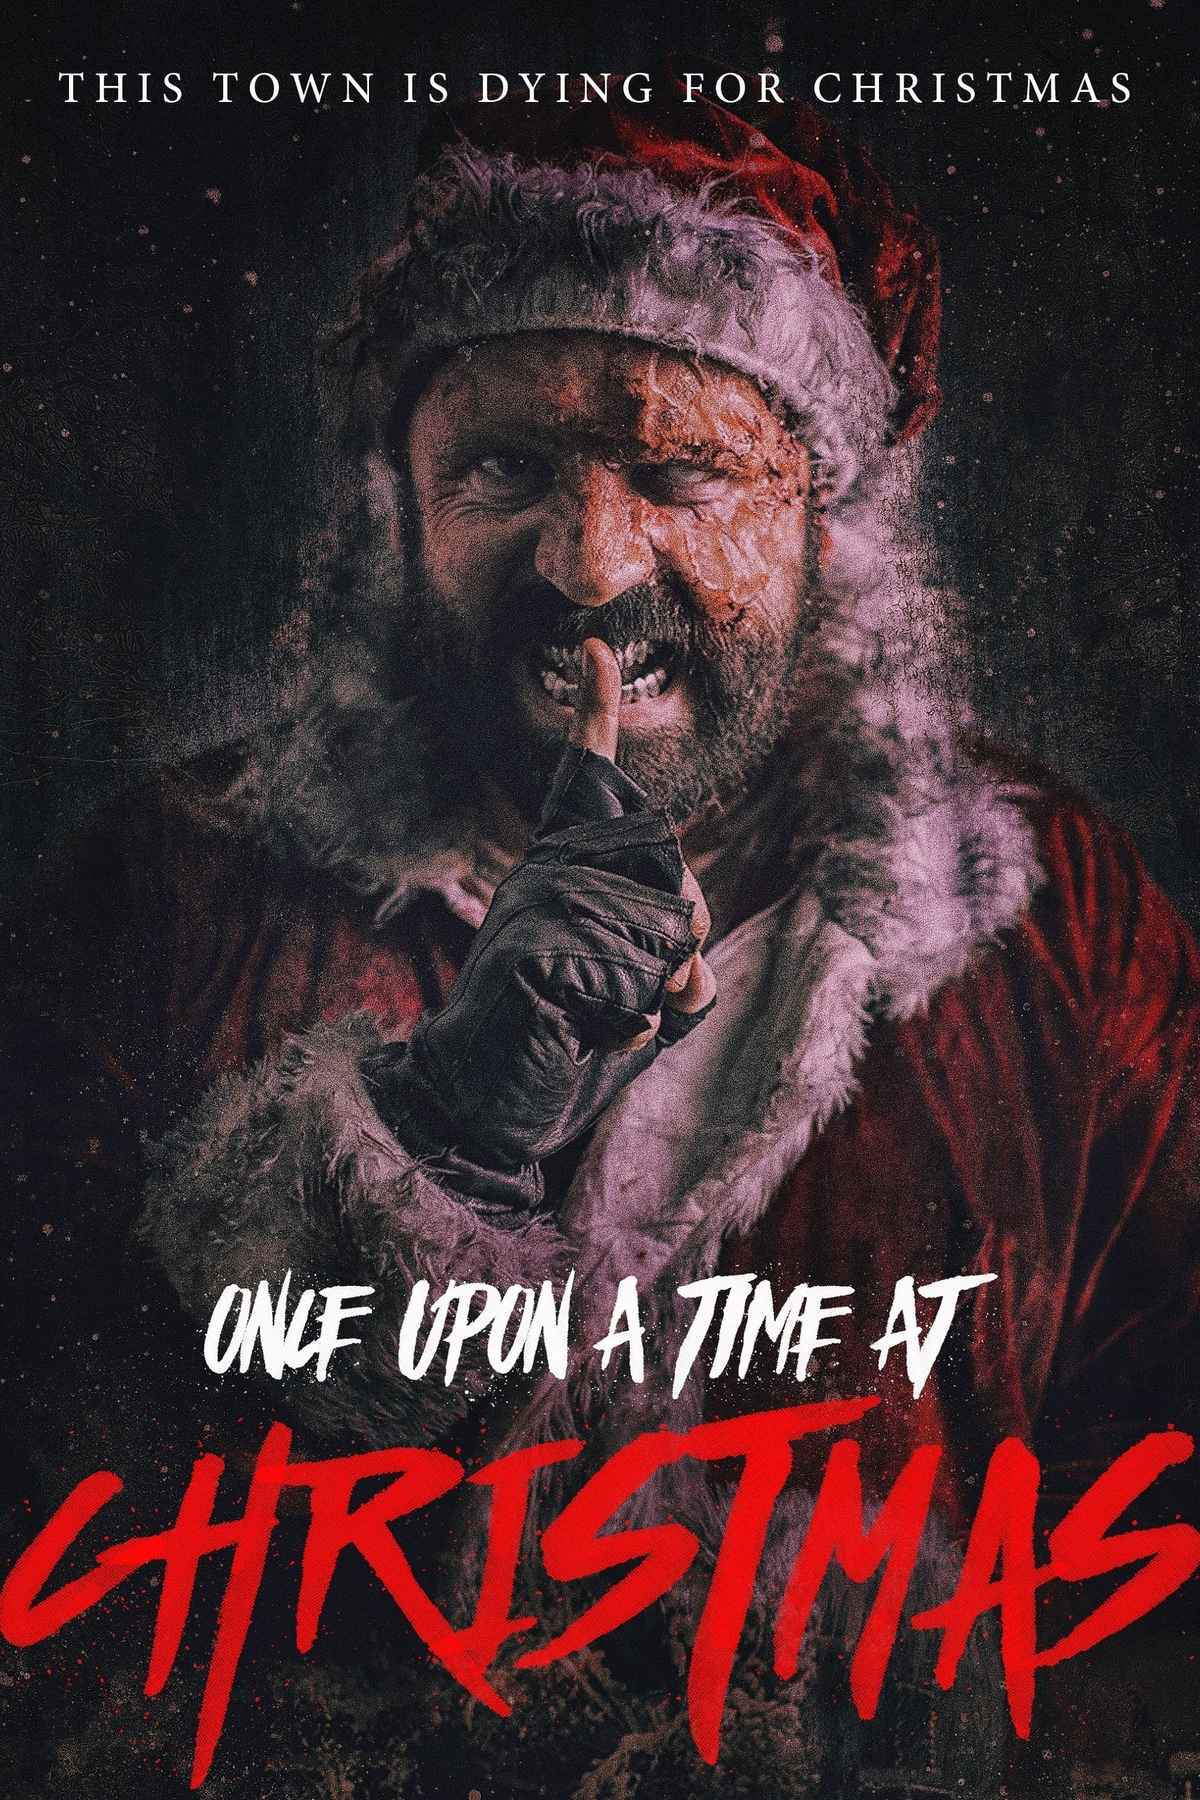 Once Upon a Time at Christmas